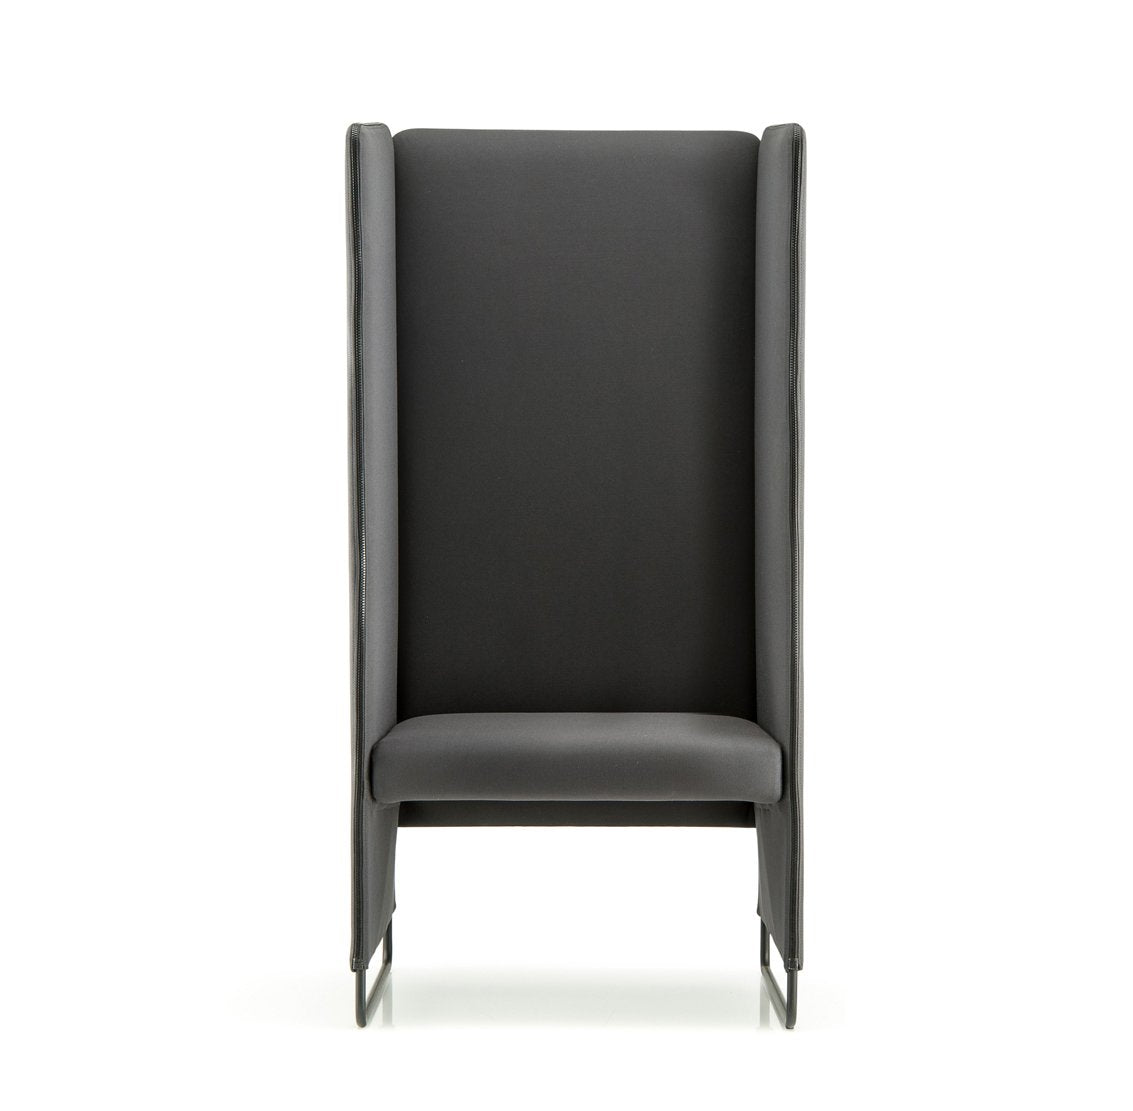 Zippo ZIP1P/140 Modular Lounge Unit-Pedrali-Contract Furniture Store